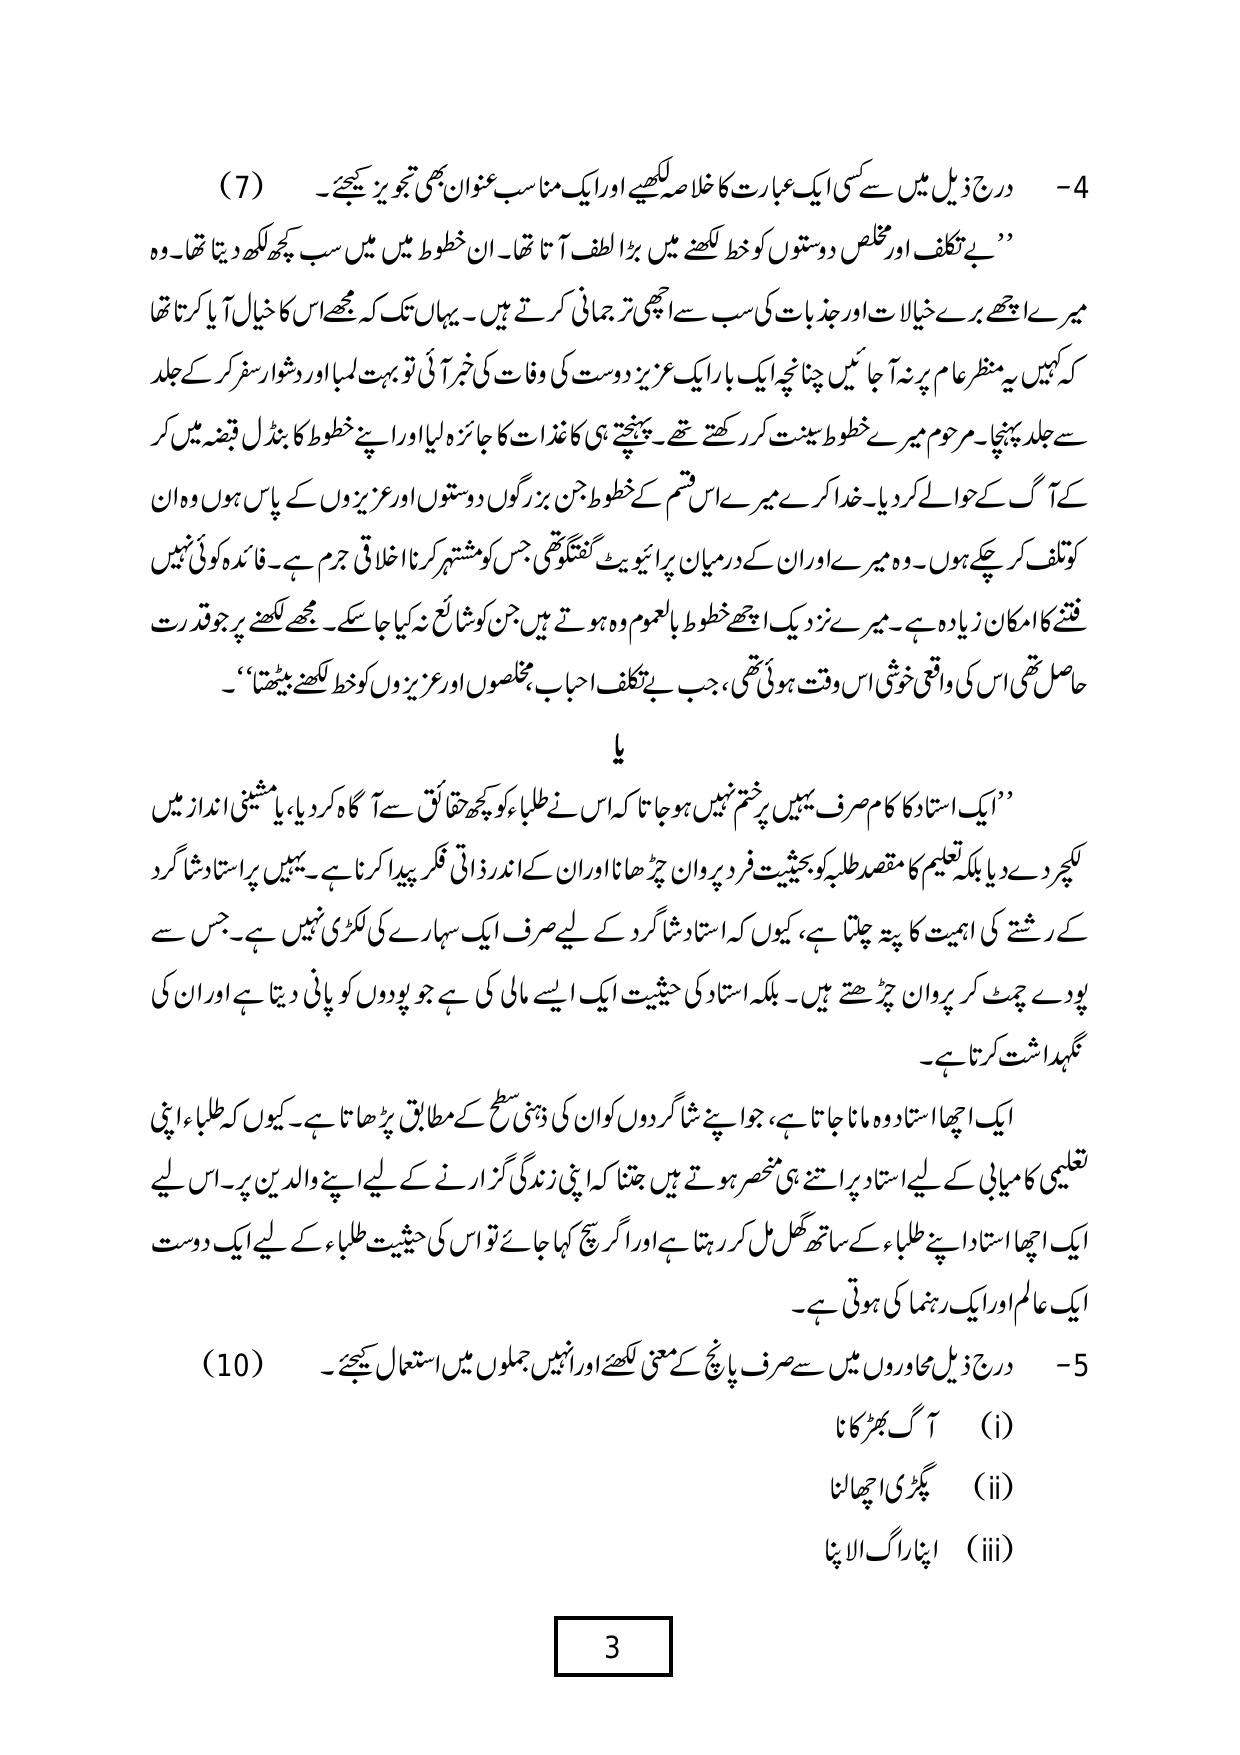 CBSE Class 12 Urdu Core -Sample Paper 2019-20 - Page 3